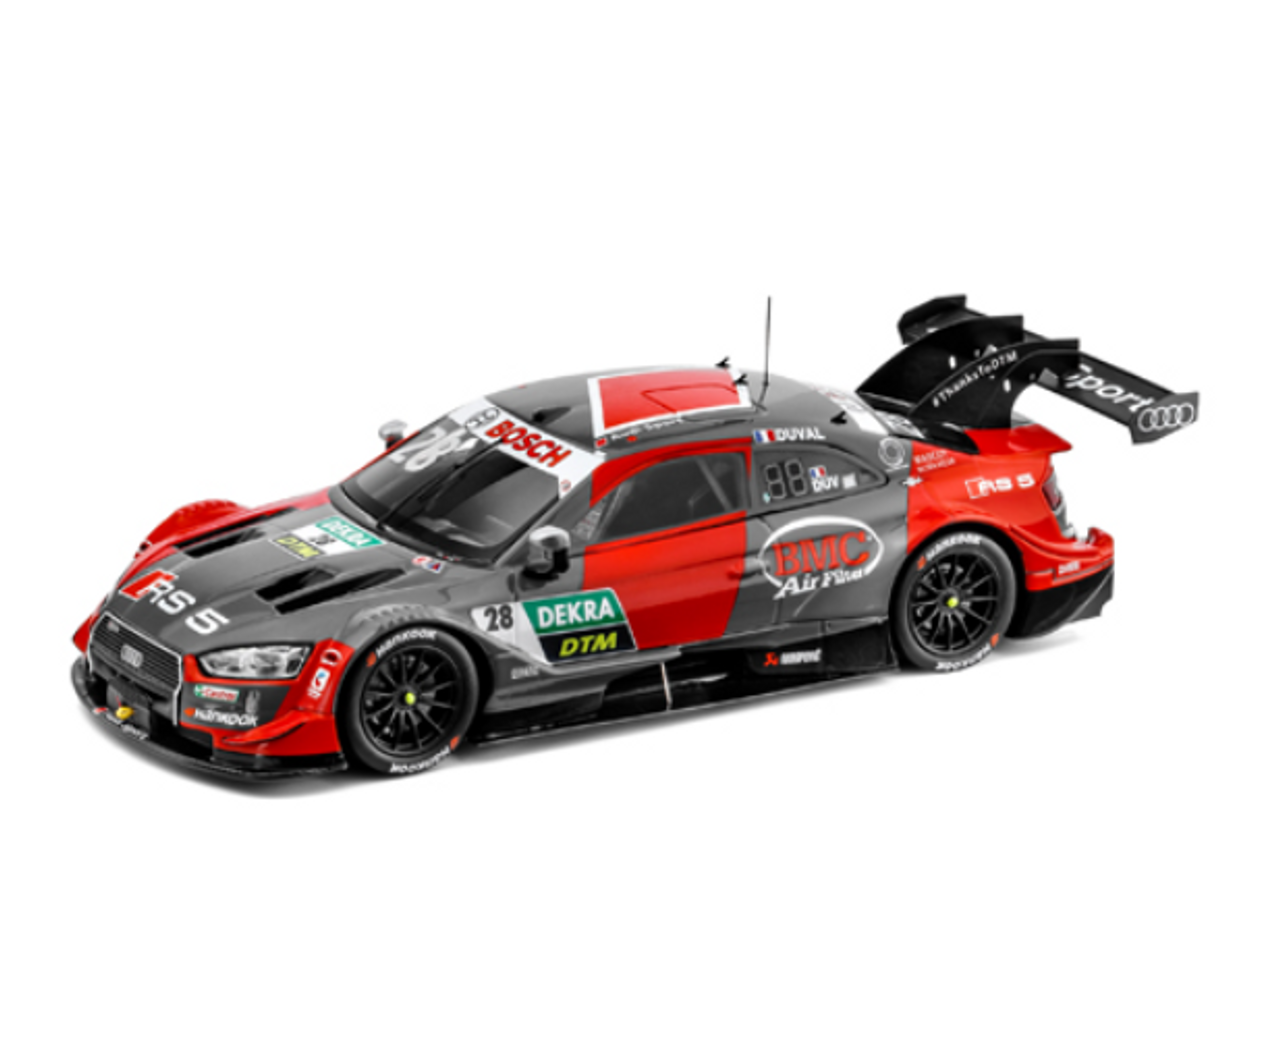 Audi RS5 DTM 2020 - Loïc Duval, model car, 1:43, red, grey, Audi Sport collection